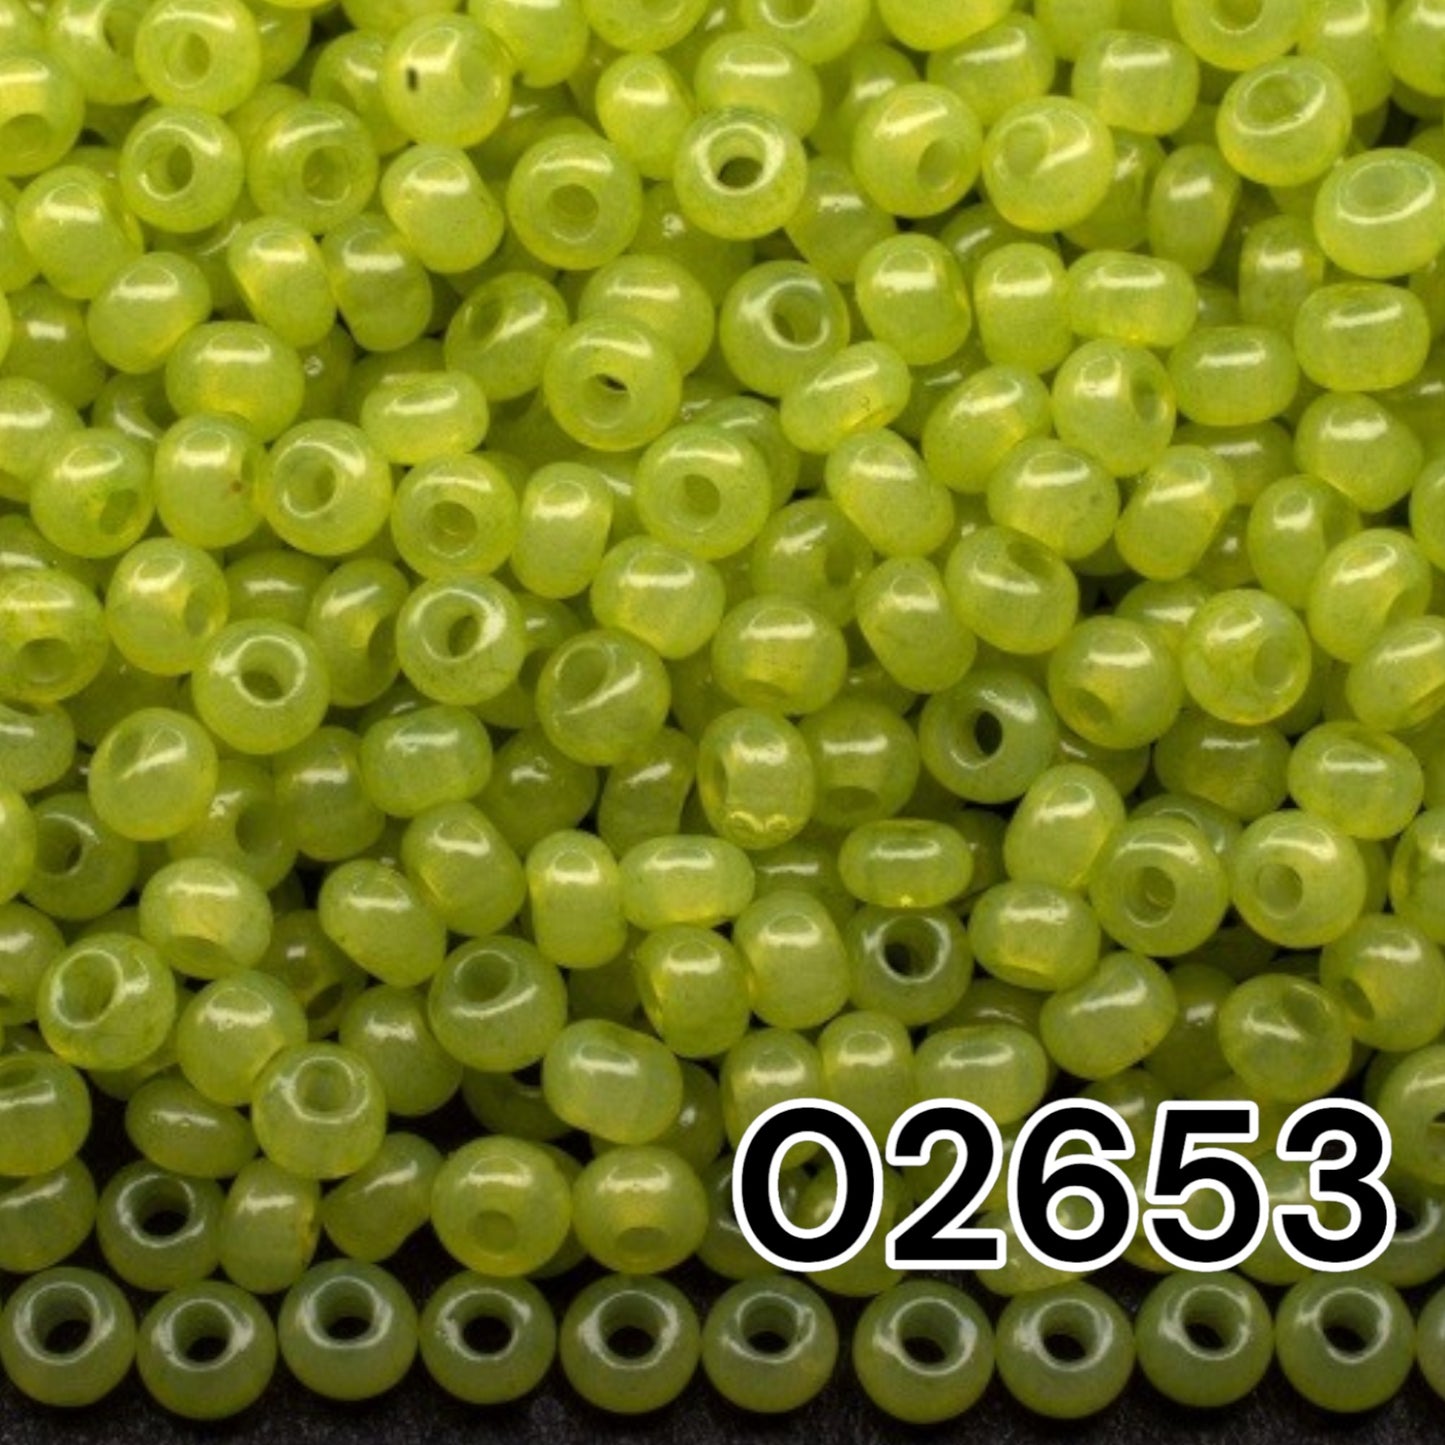 02653 Czech seed beads PRECIOSA round 10/0 light green. Alabaster - Solgel Dyed.